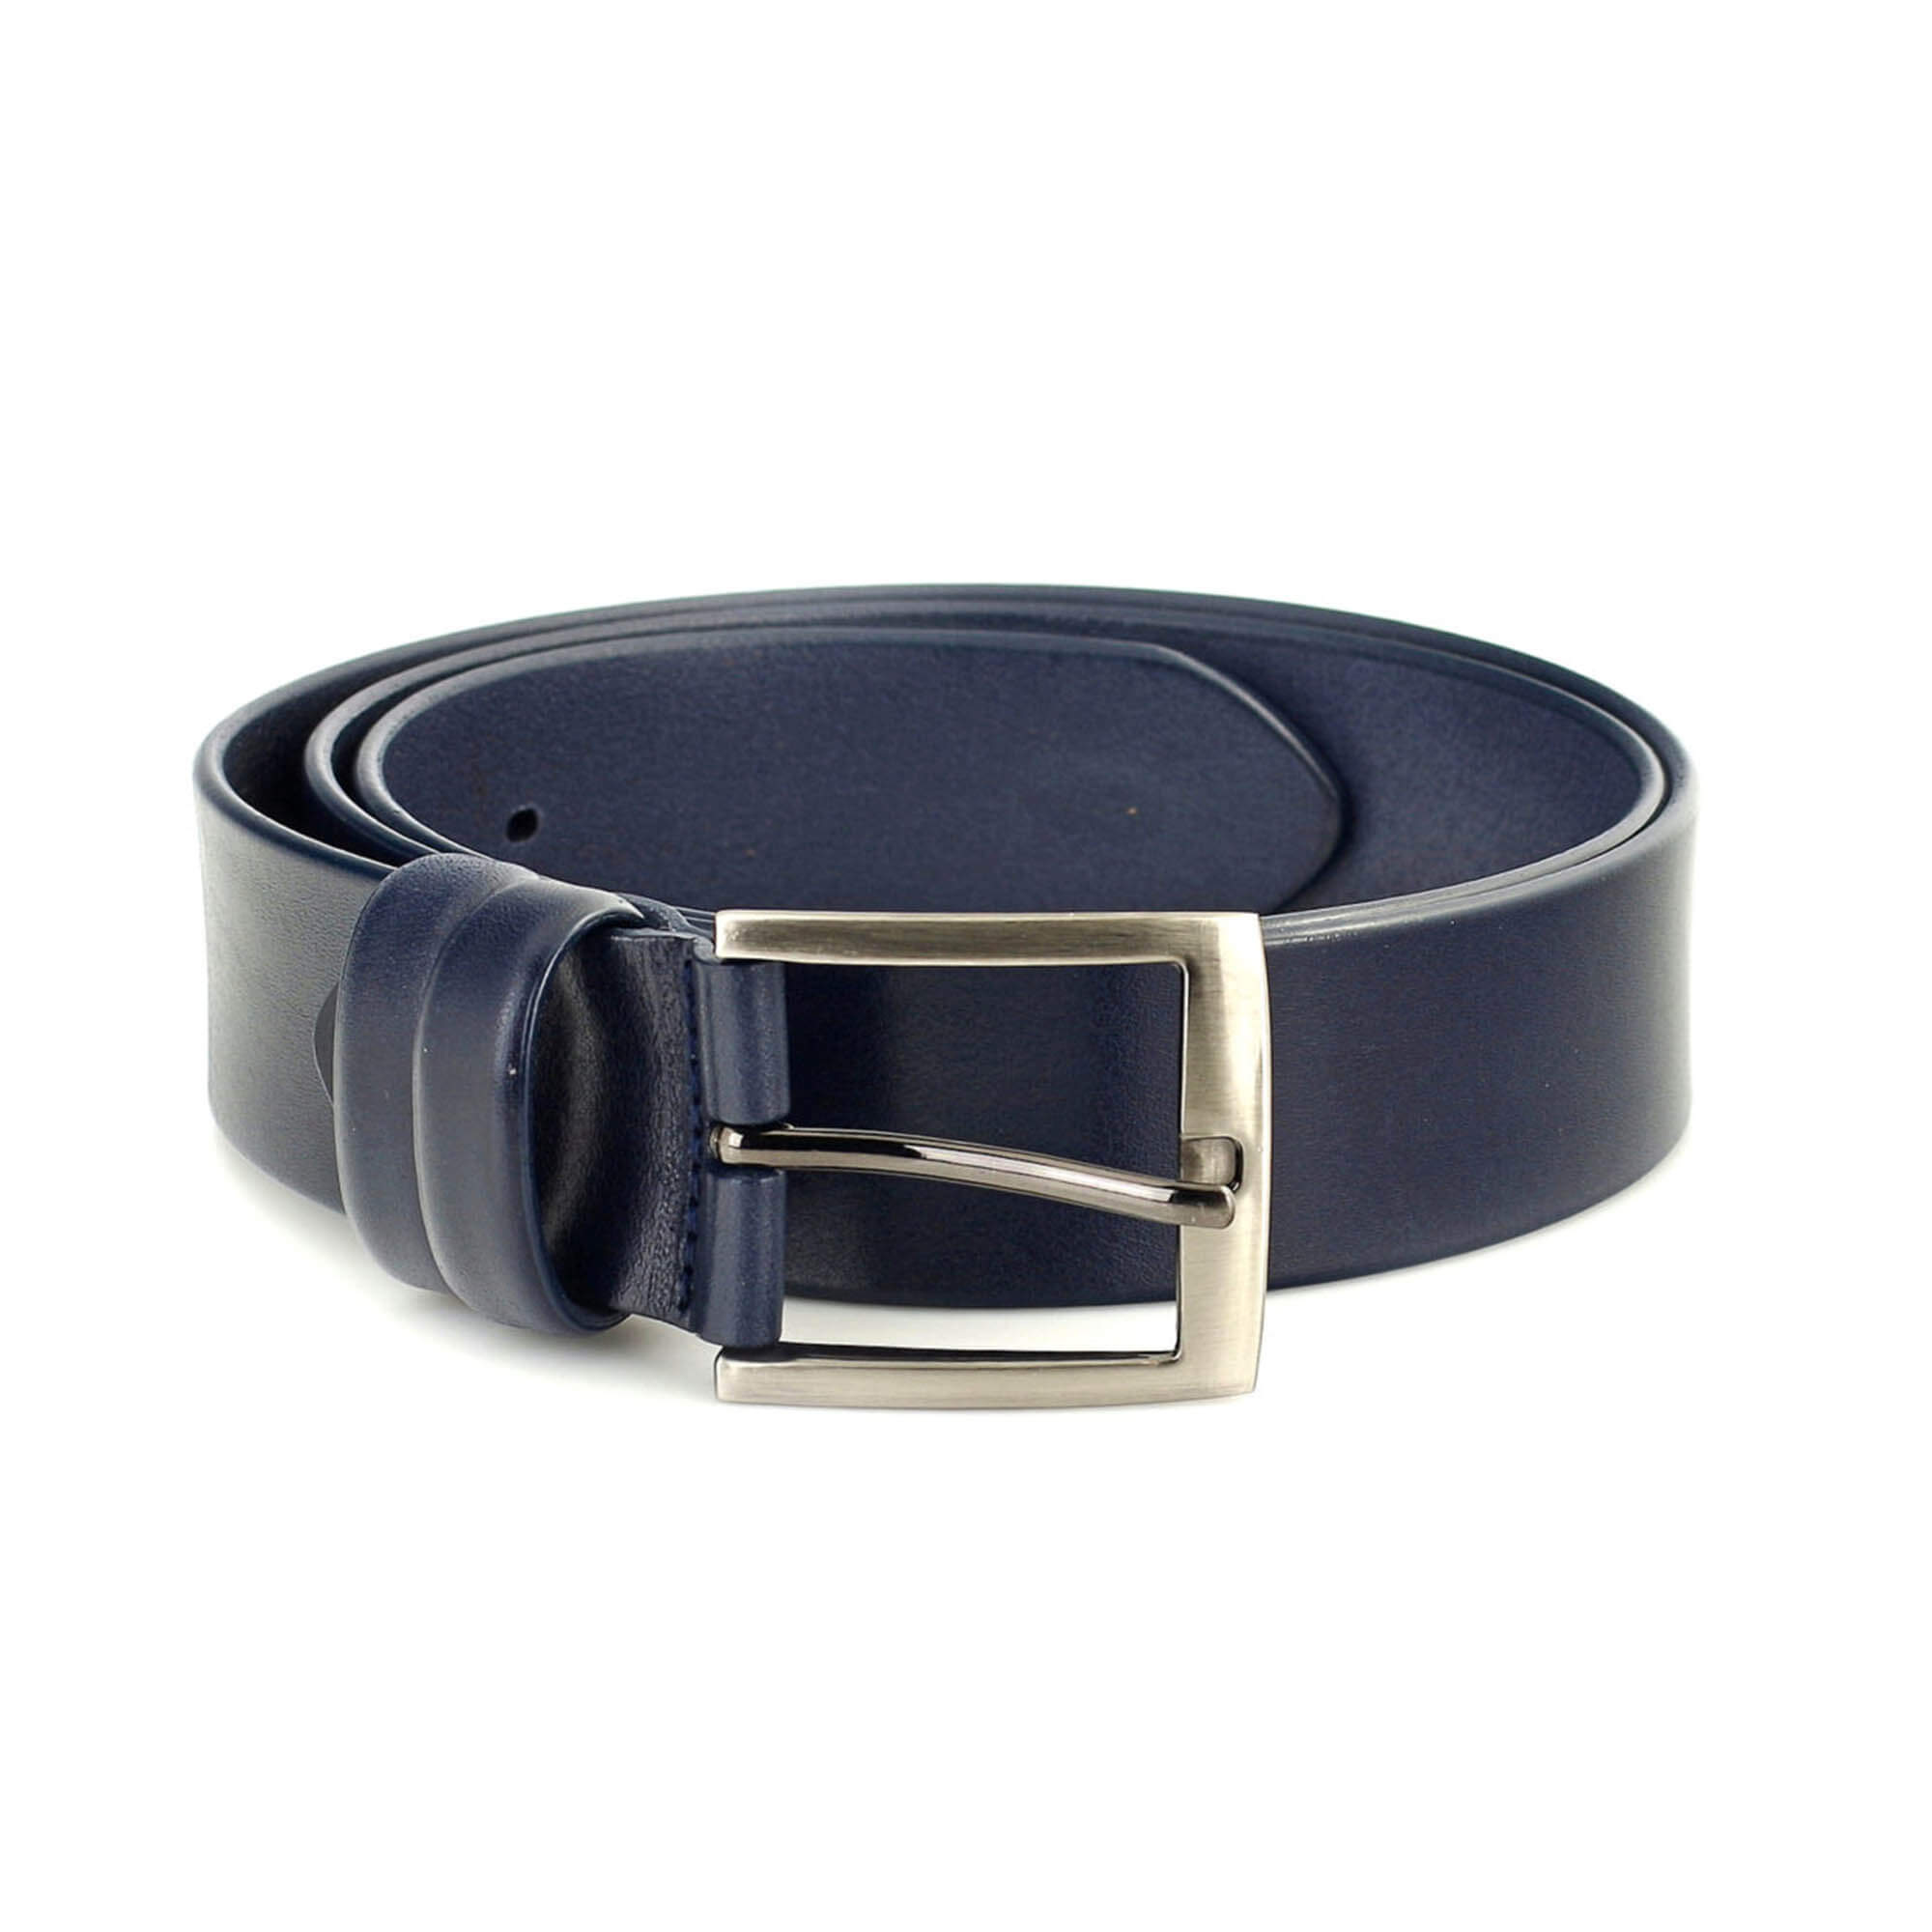 Buy Dark Blue Men's Belt For Jeans - Thick Wide 4.0 Cm